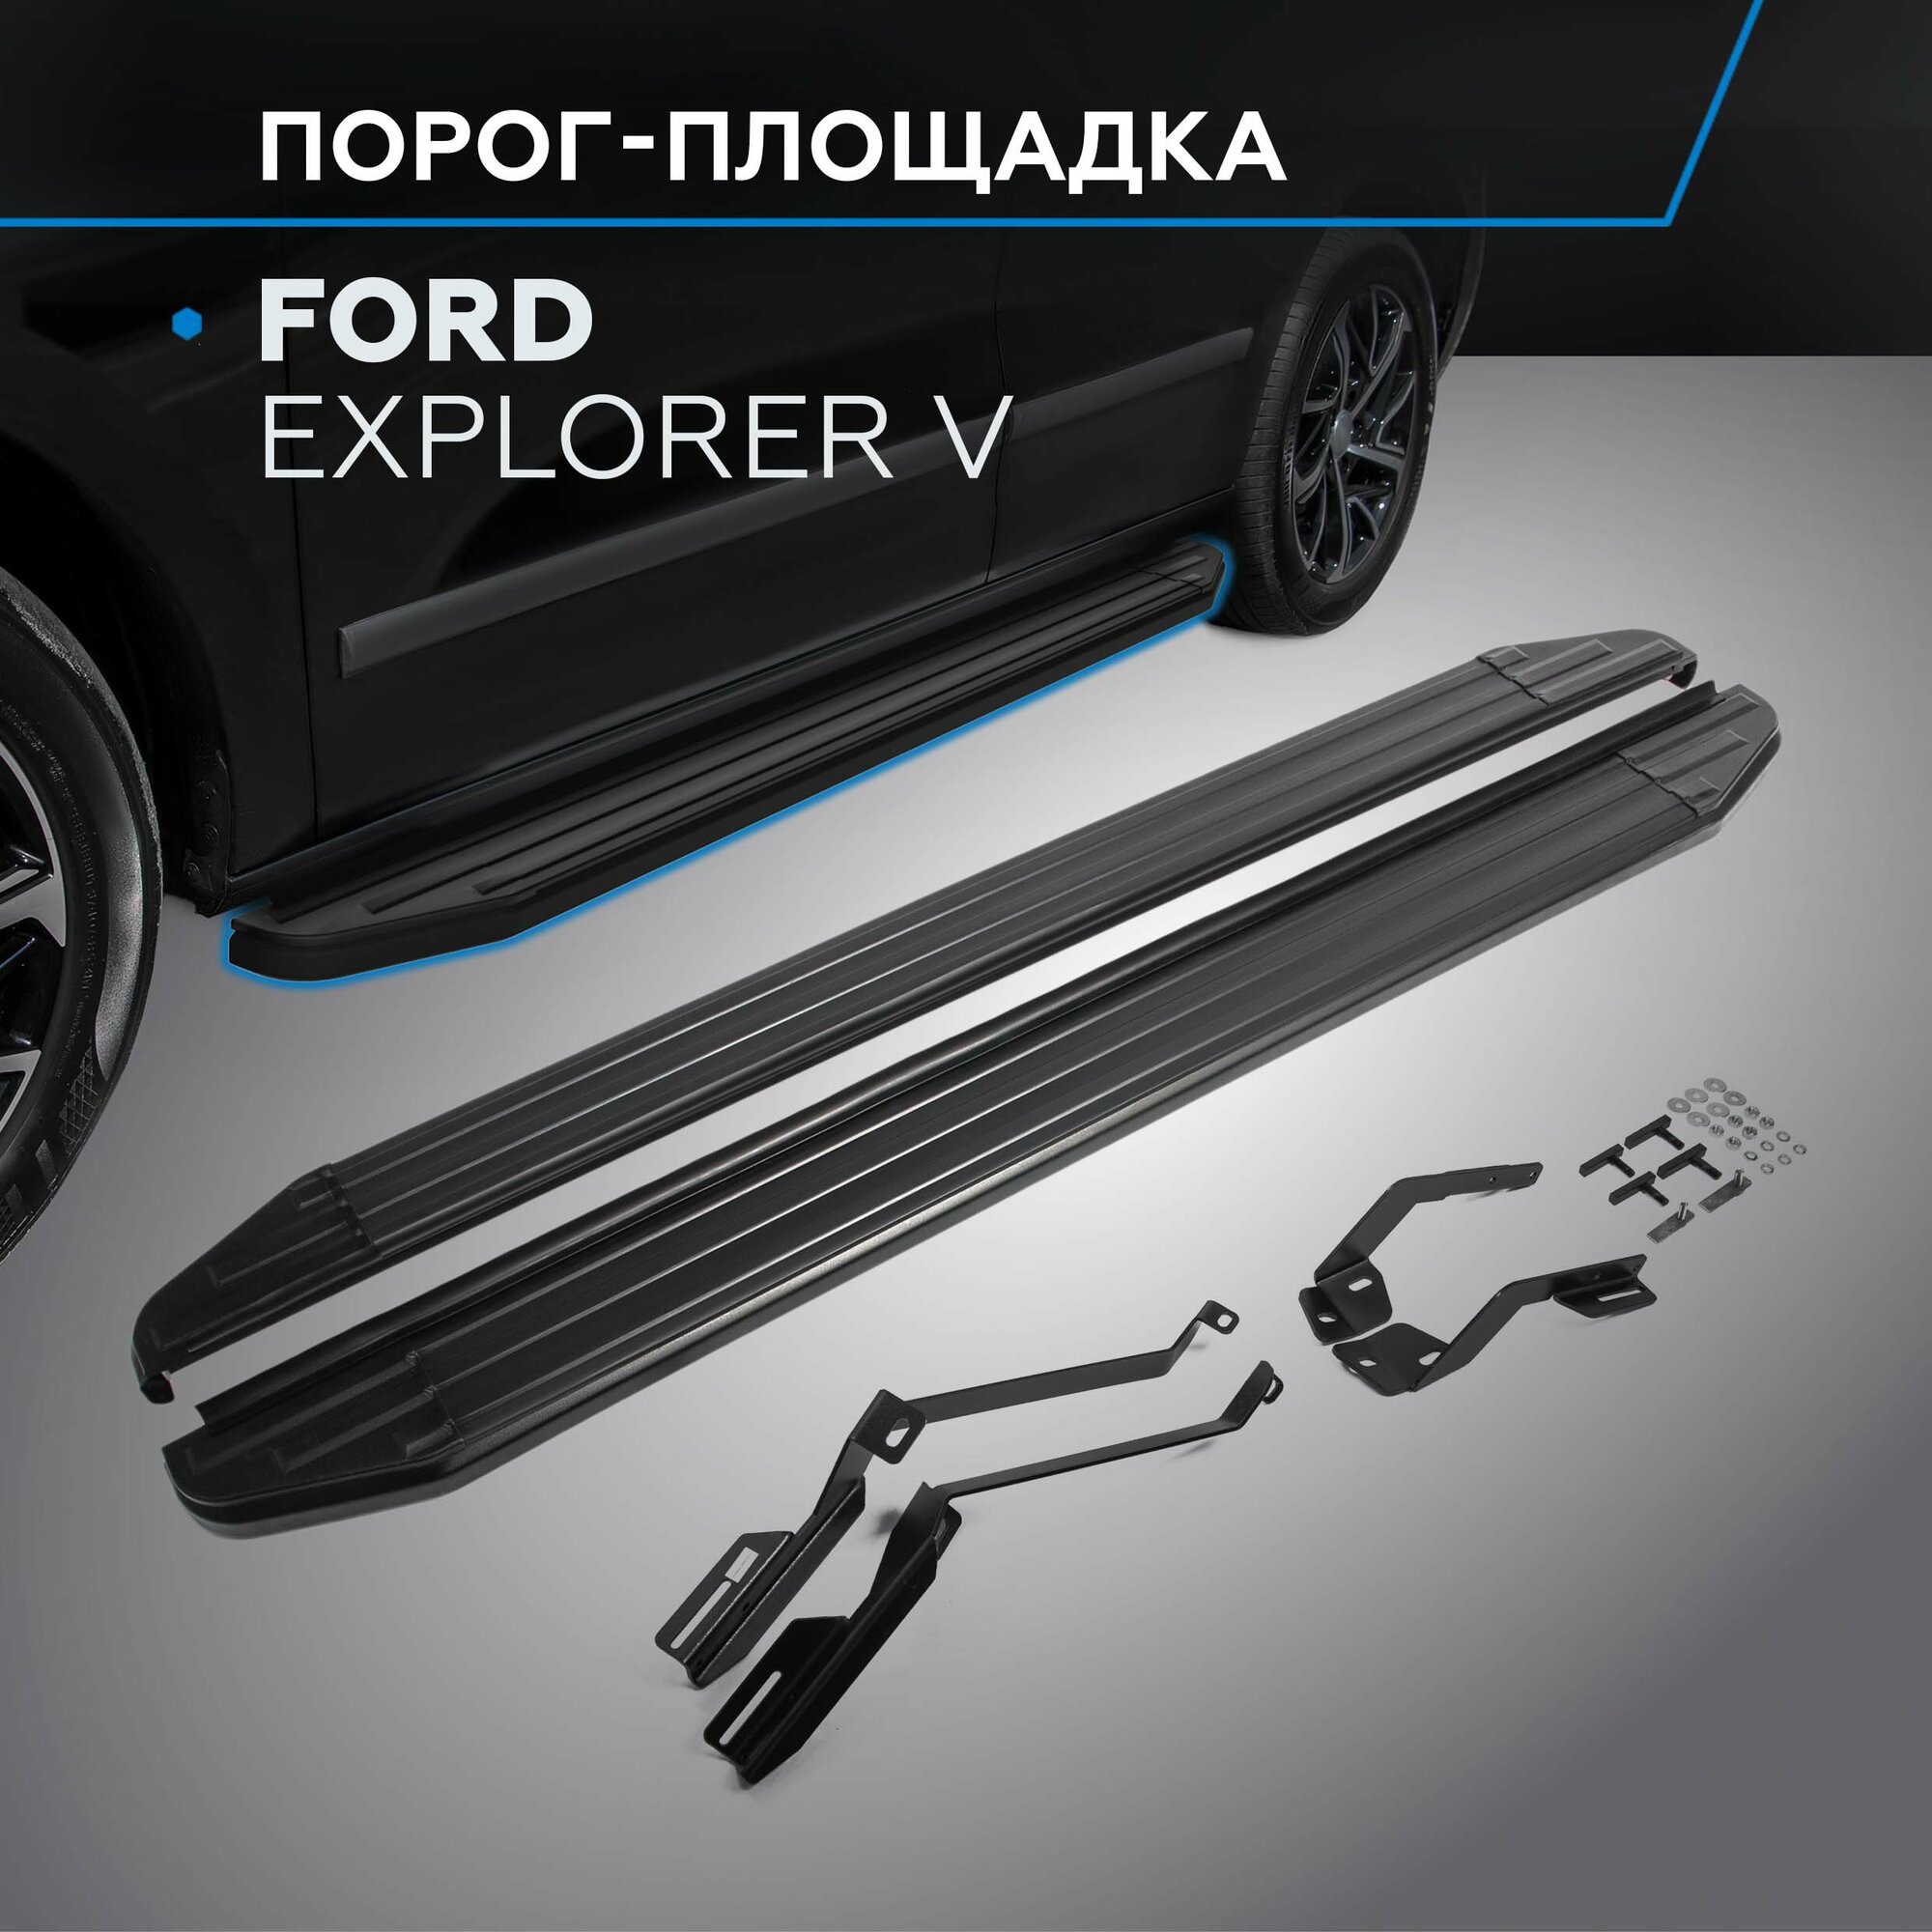 Пороги на автомобиль "Premium-Black" Rival для Ford Explorer V 2010-2019 193 см 2 шт алюминий A193ALB.1802.1